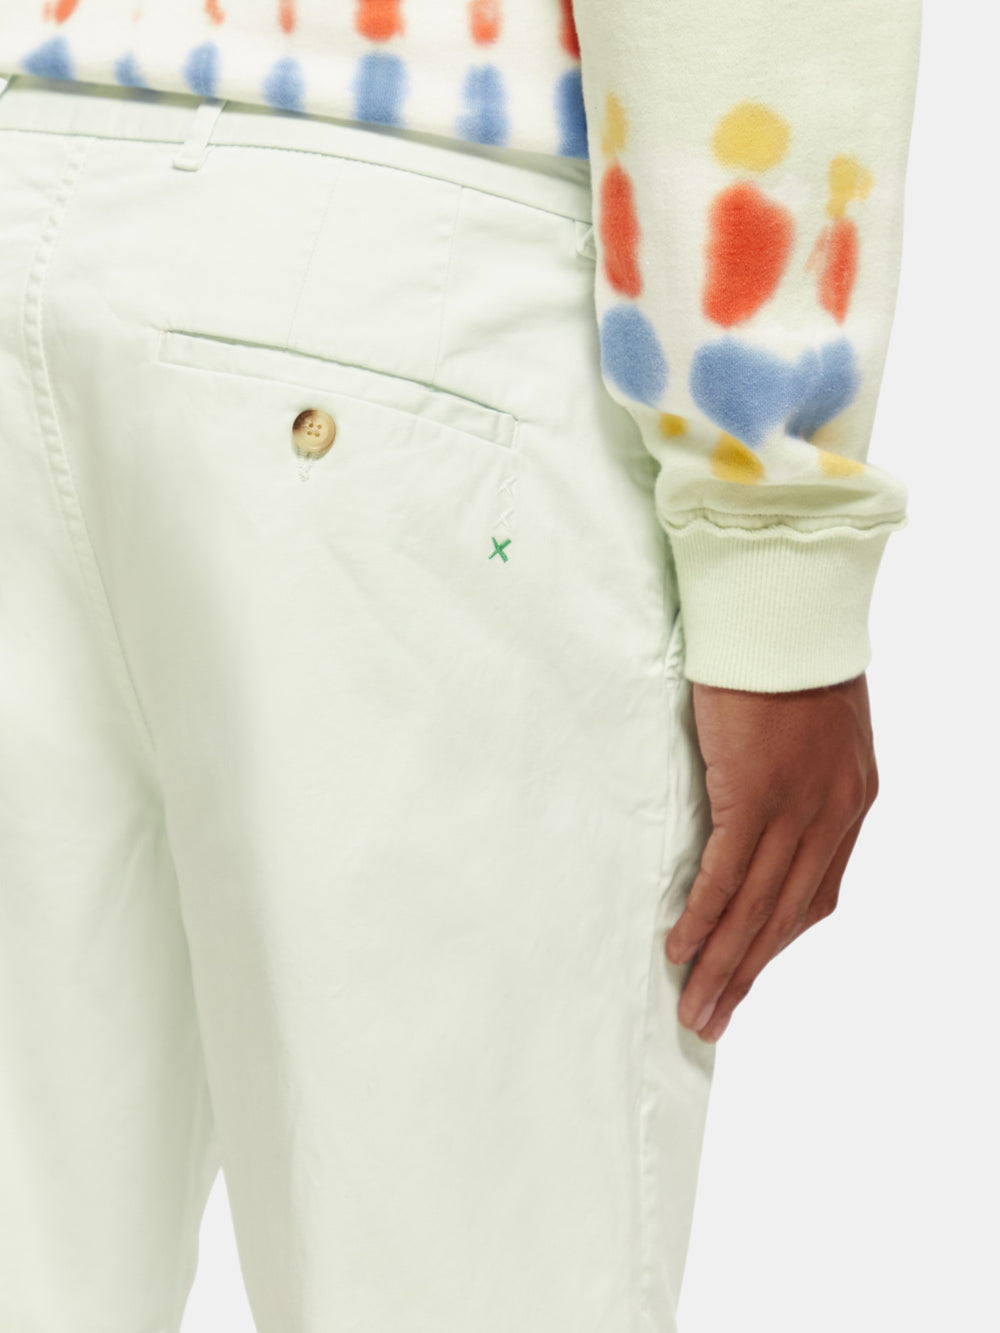 Stuart garment-dyed pima cotton shorts - Scotch & Soda AU